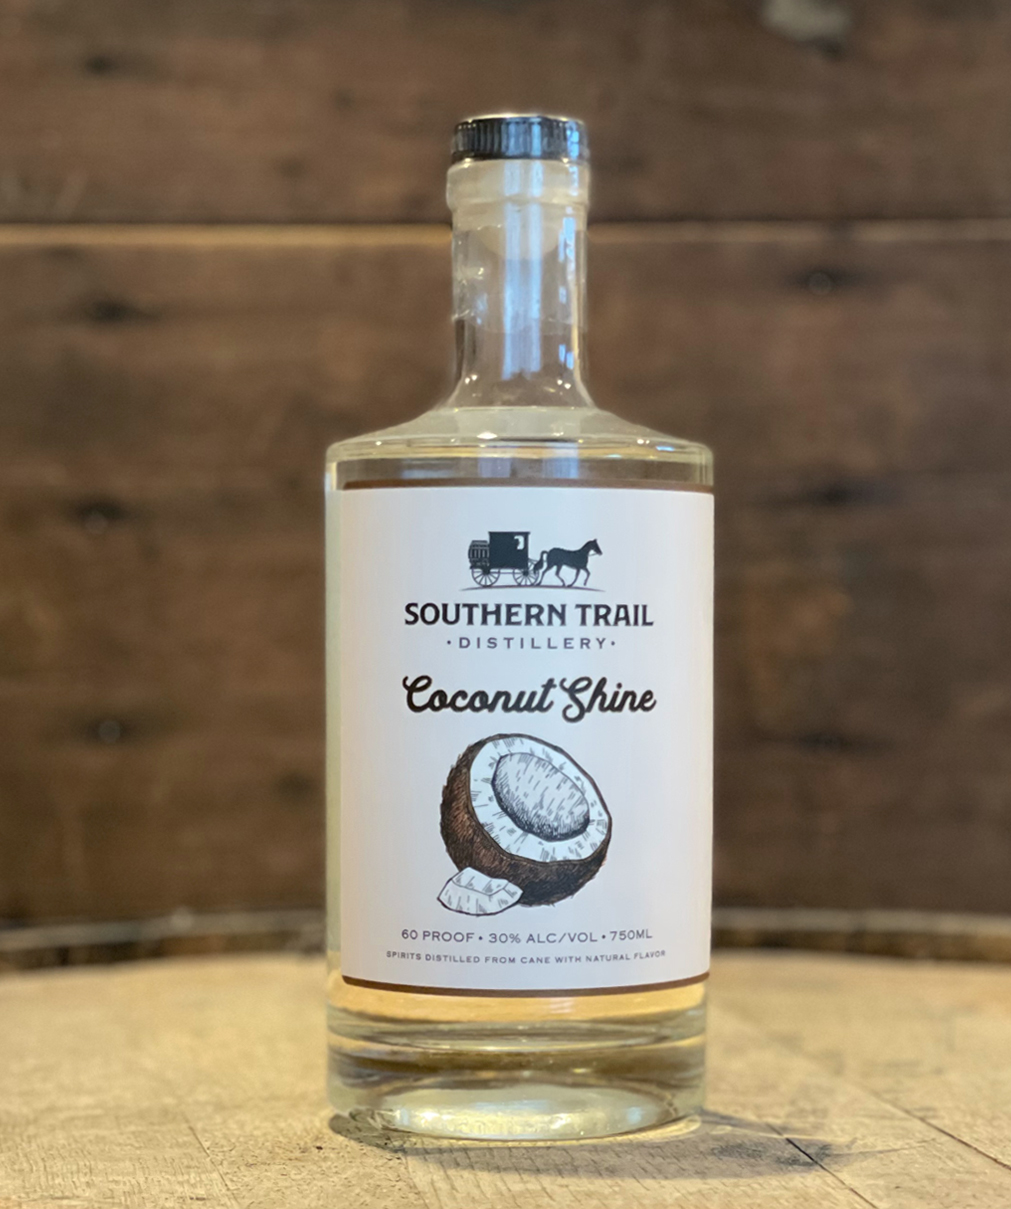 Coconut Shine Southern Trail Distillery